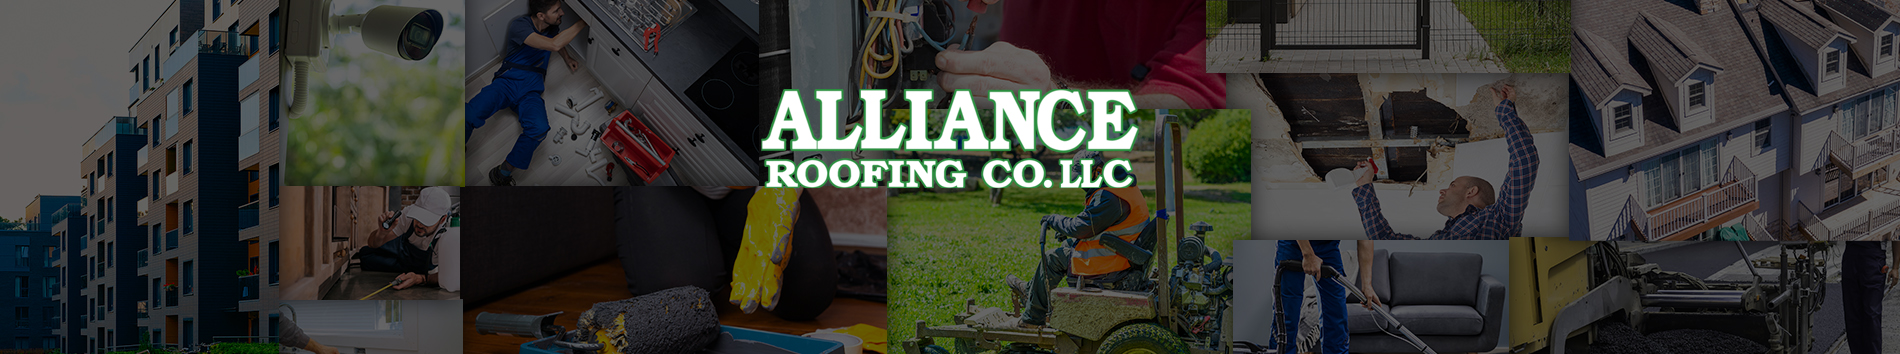 Alliance Roofing Co., LLC